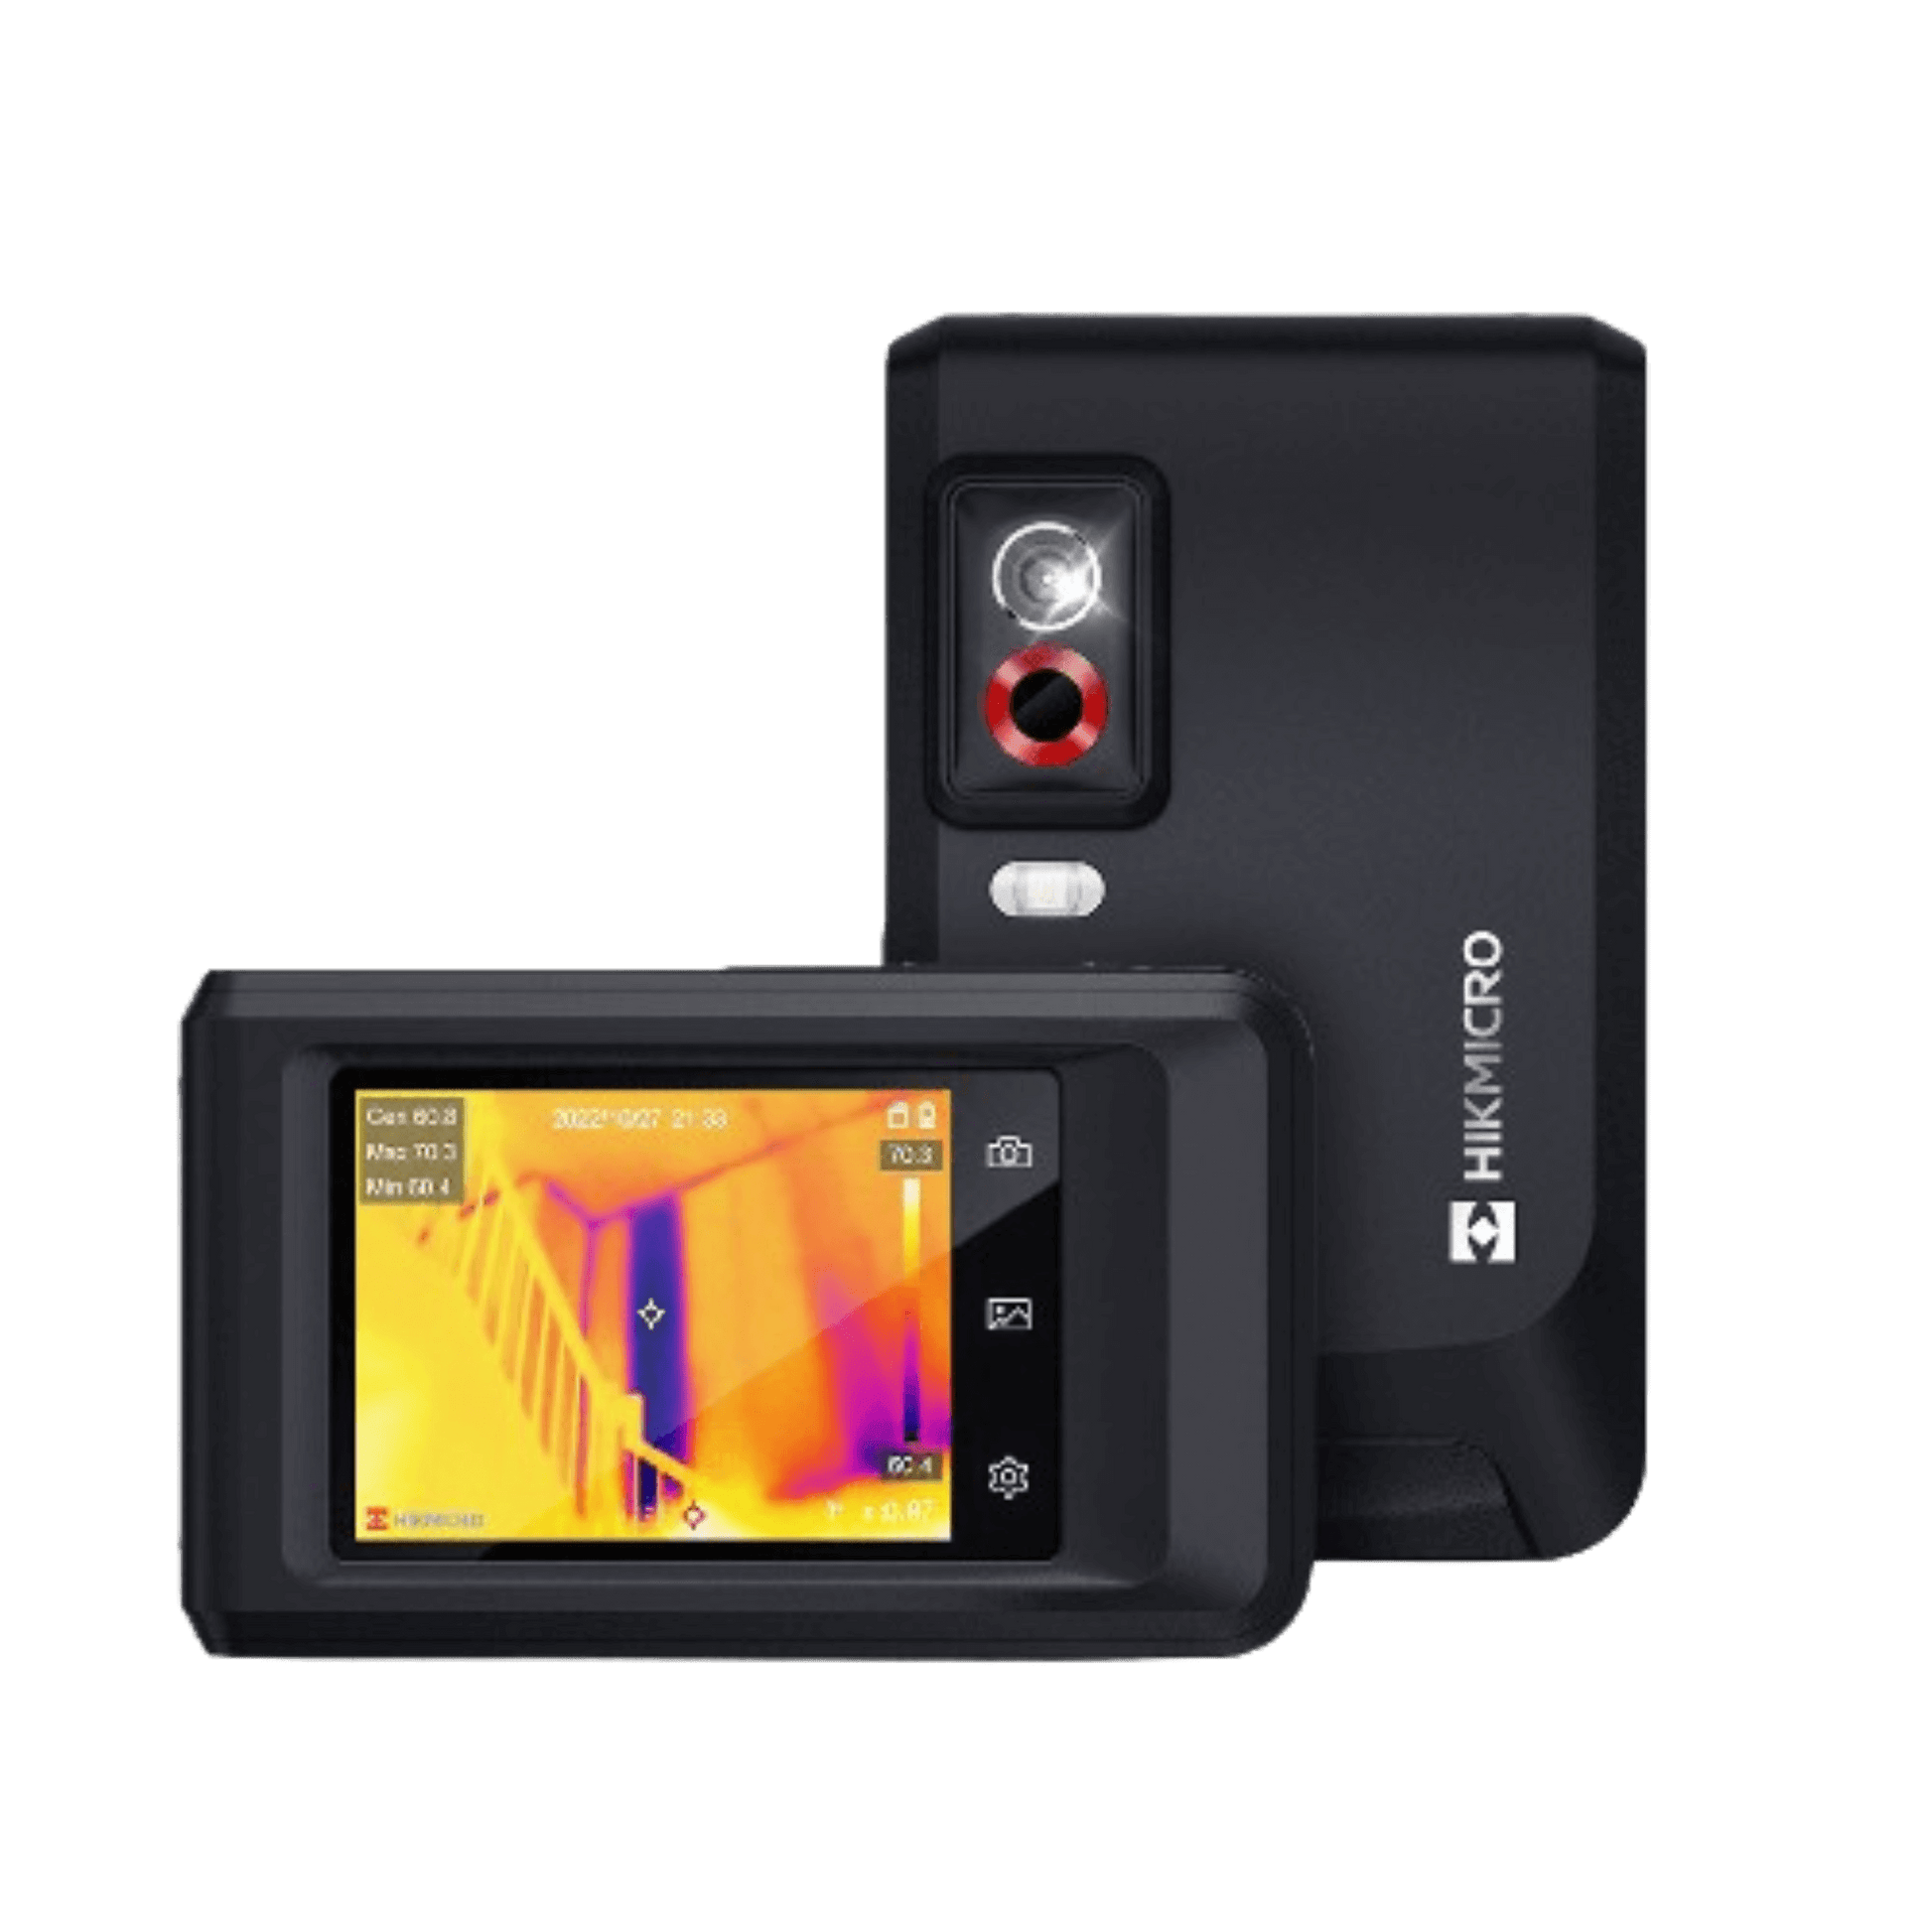 HikMicro Pocket 1 Handheld Thermography Camera